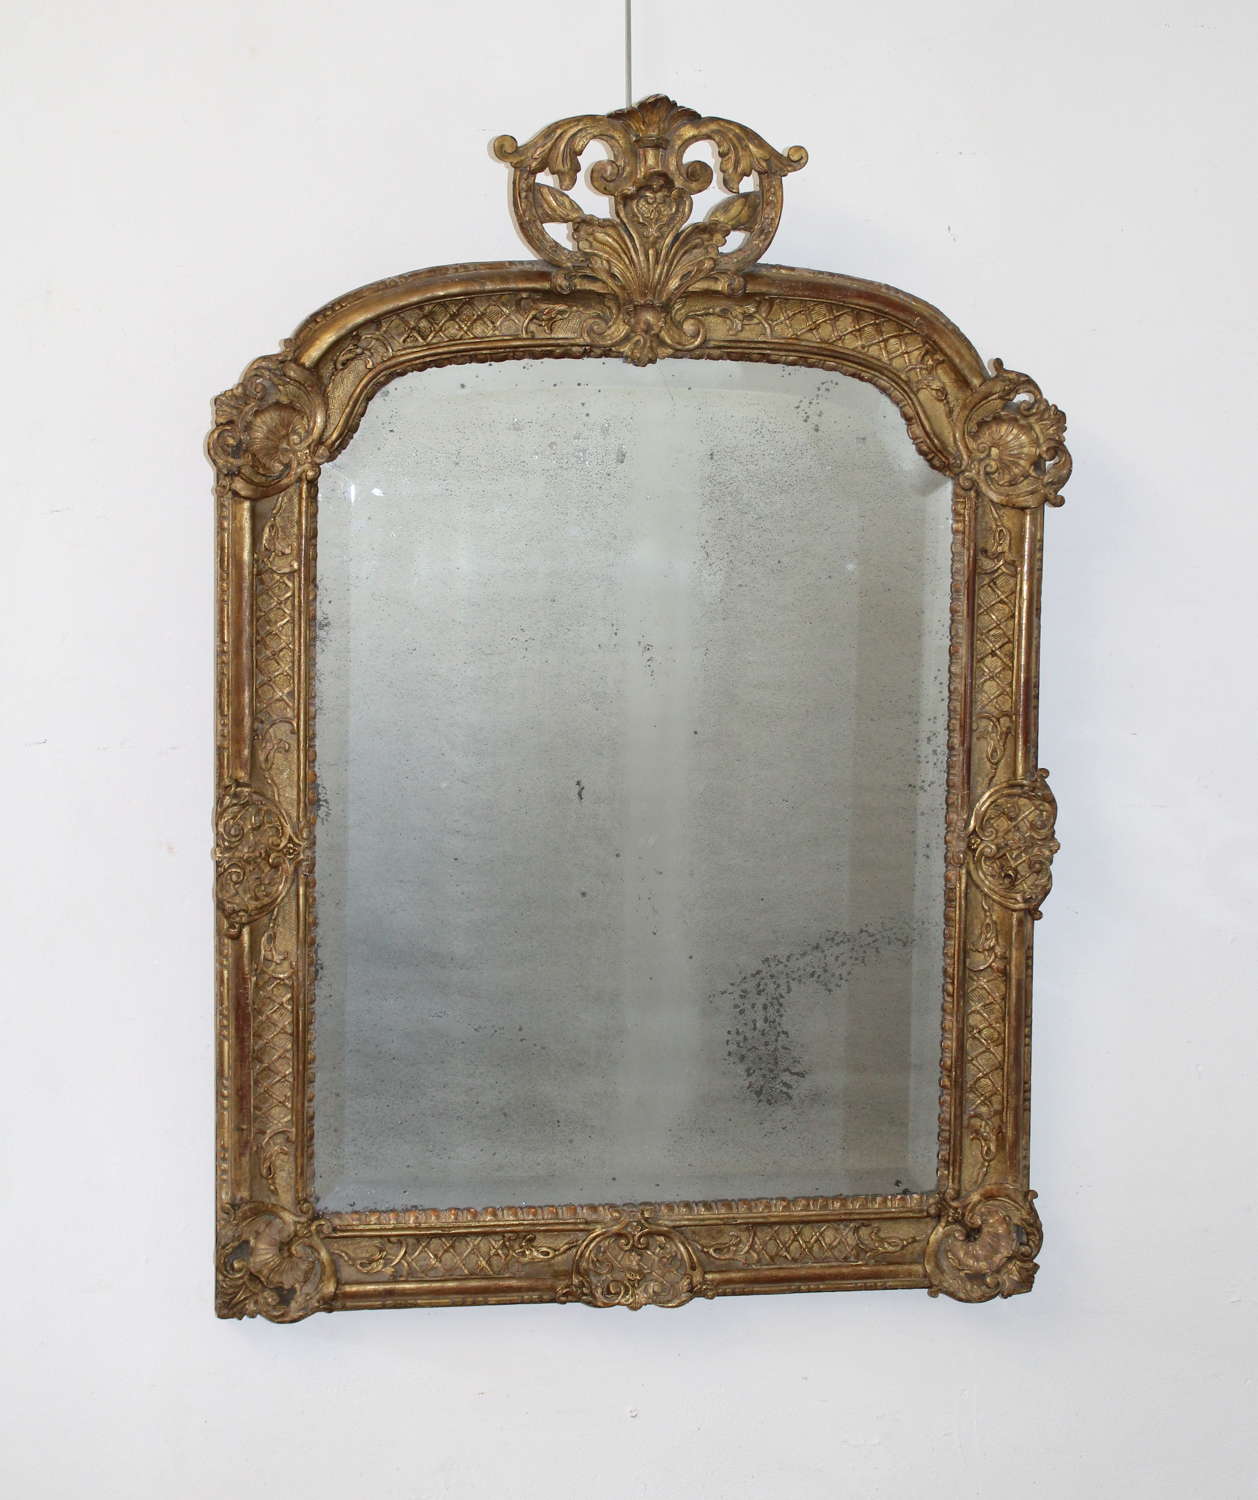 18th century French decorative giltwood mirror